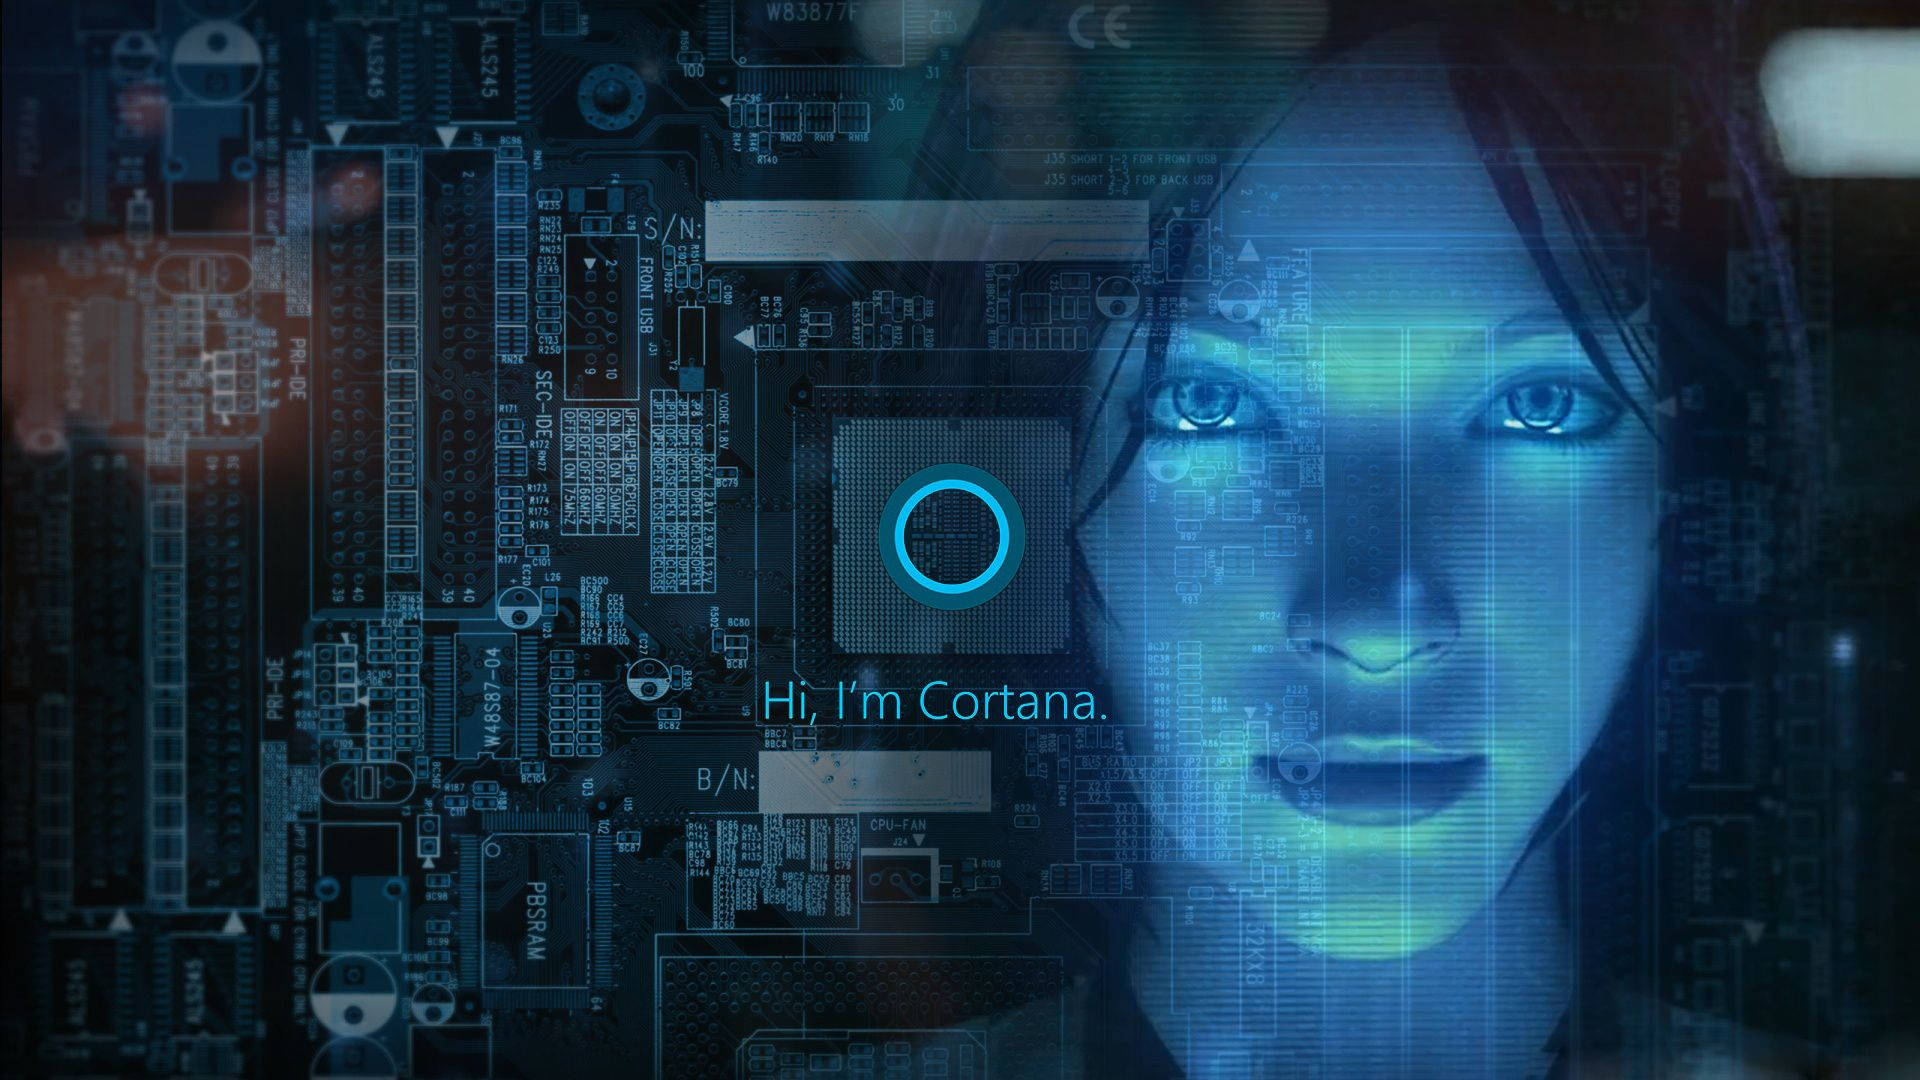 Windows 10 Hd Cortana Background